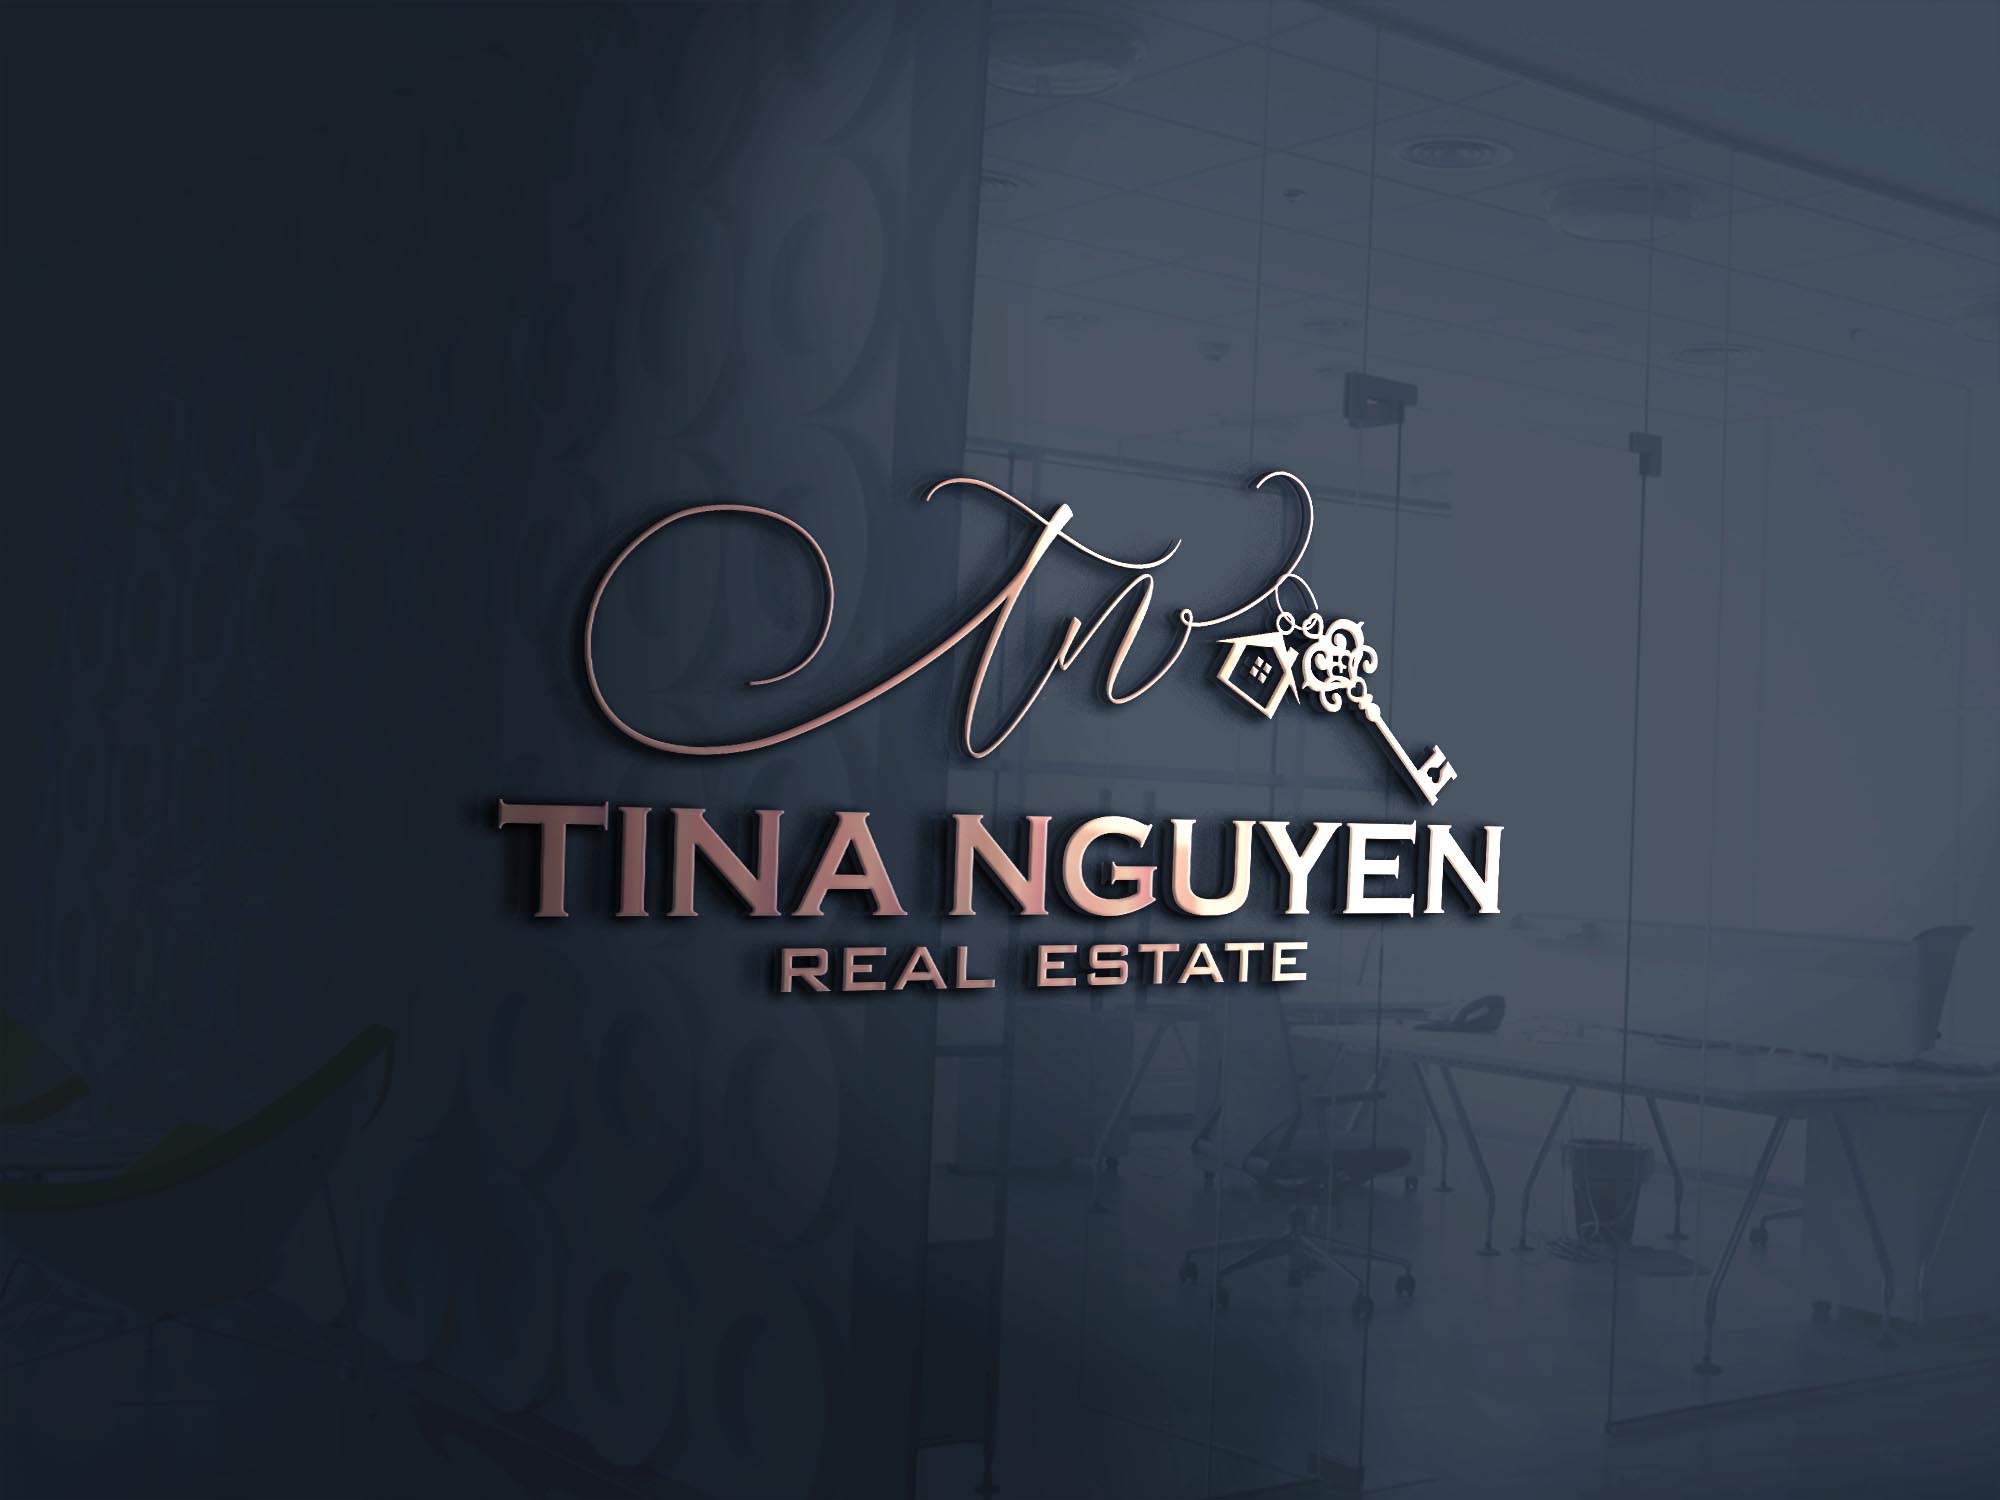 Tina Nguyen Real Estate